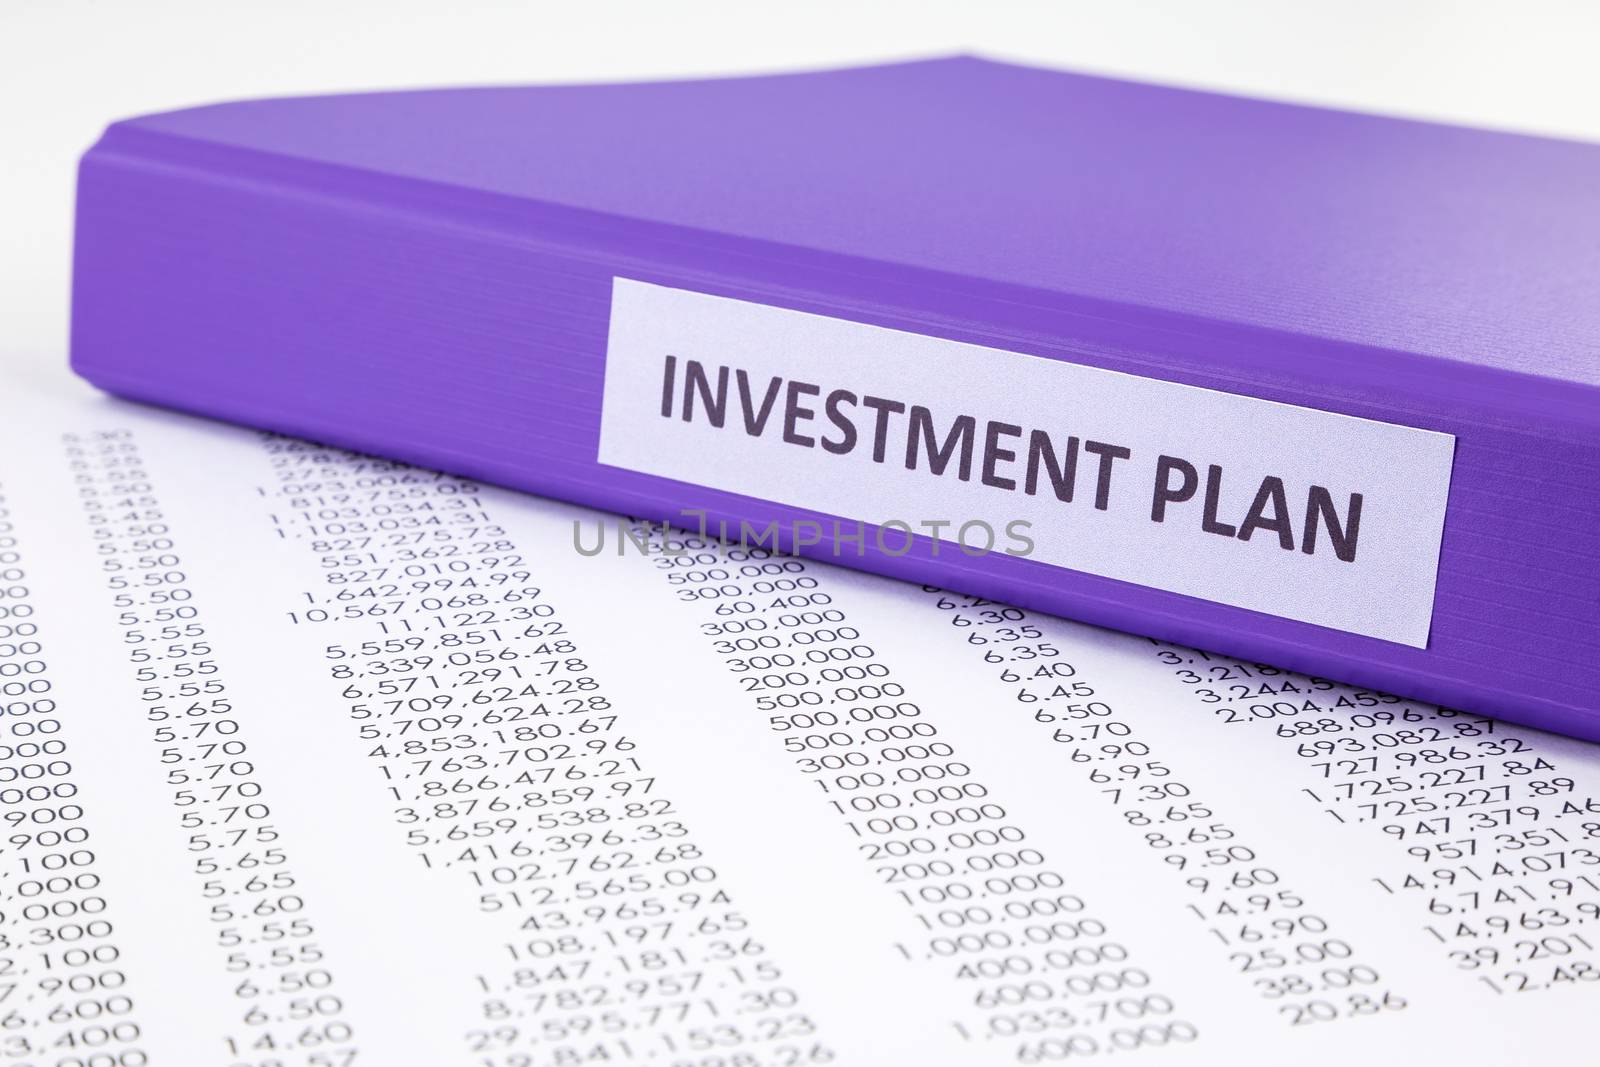 Financial report for investment plan by vinnstock